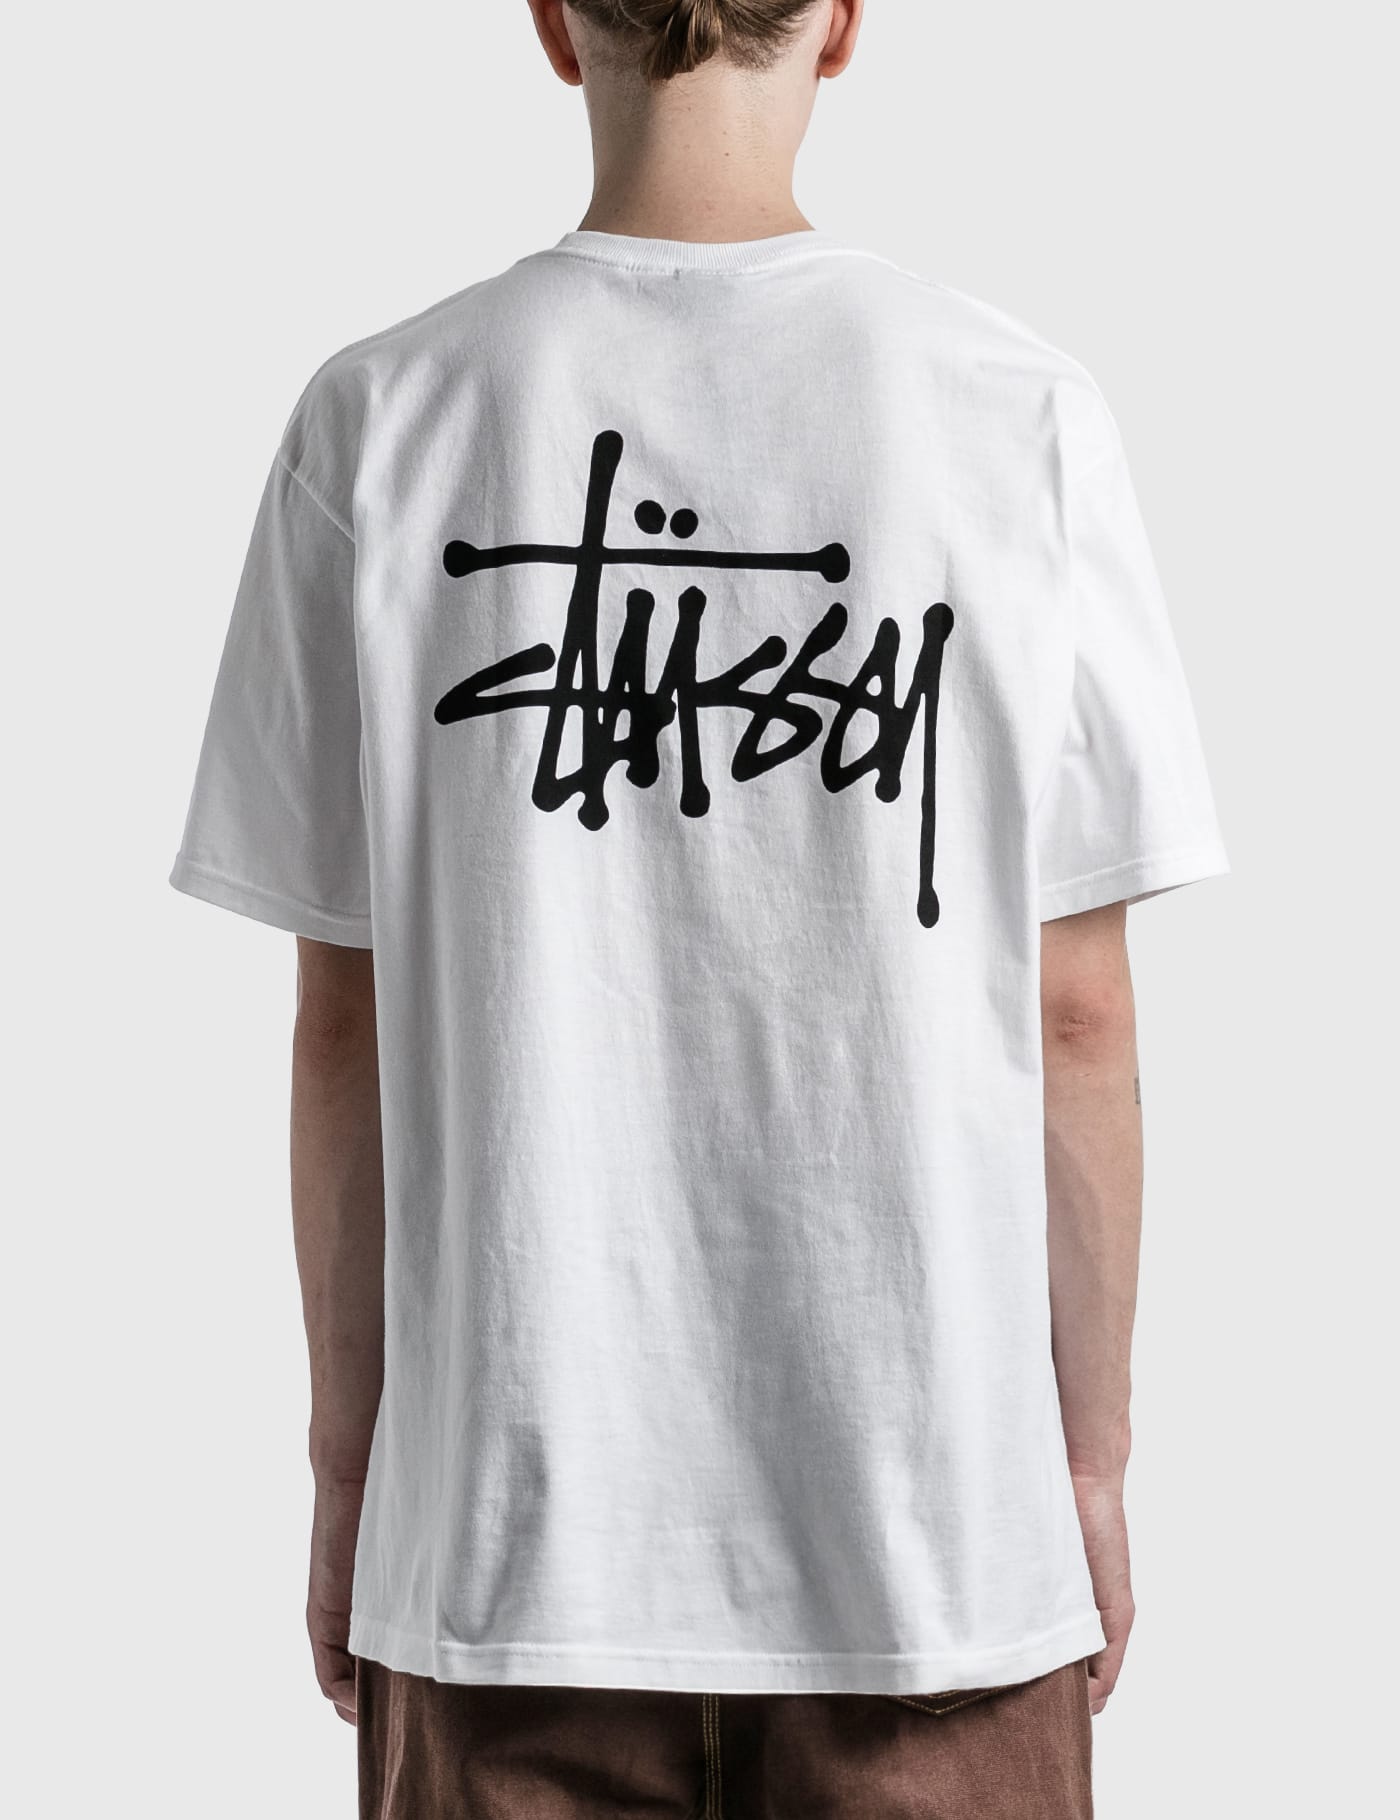 Stüssy - Basic Stussy T-shirt | HBX - Globally Curated Fashion and